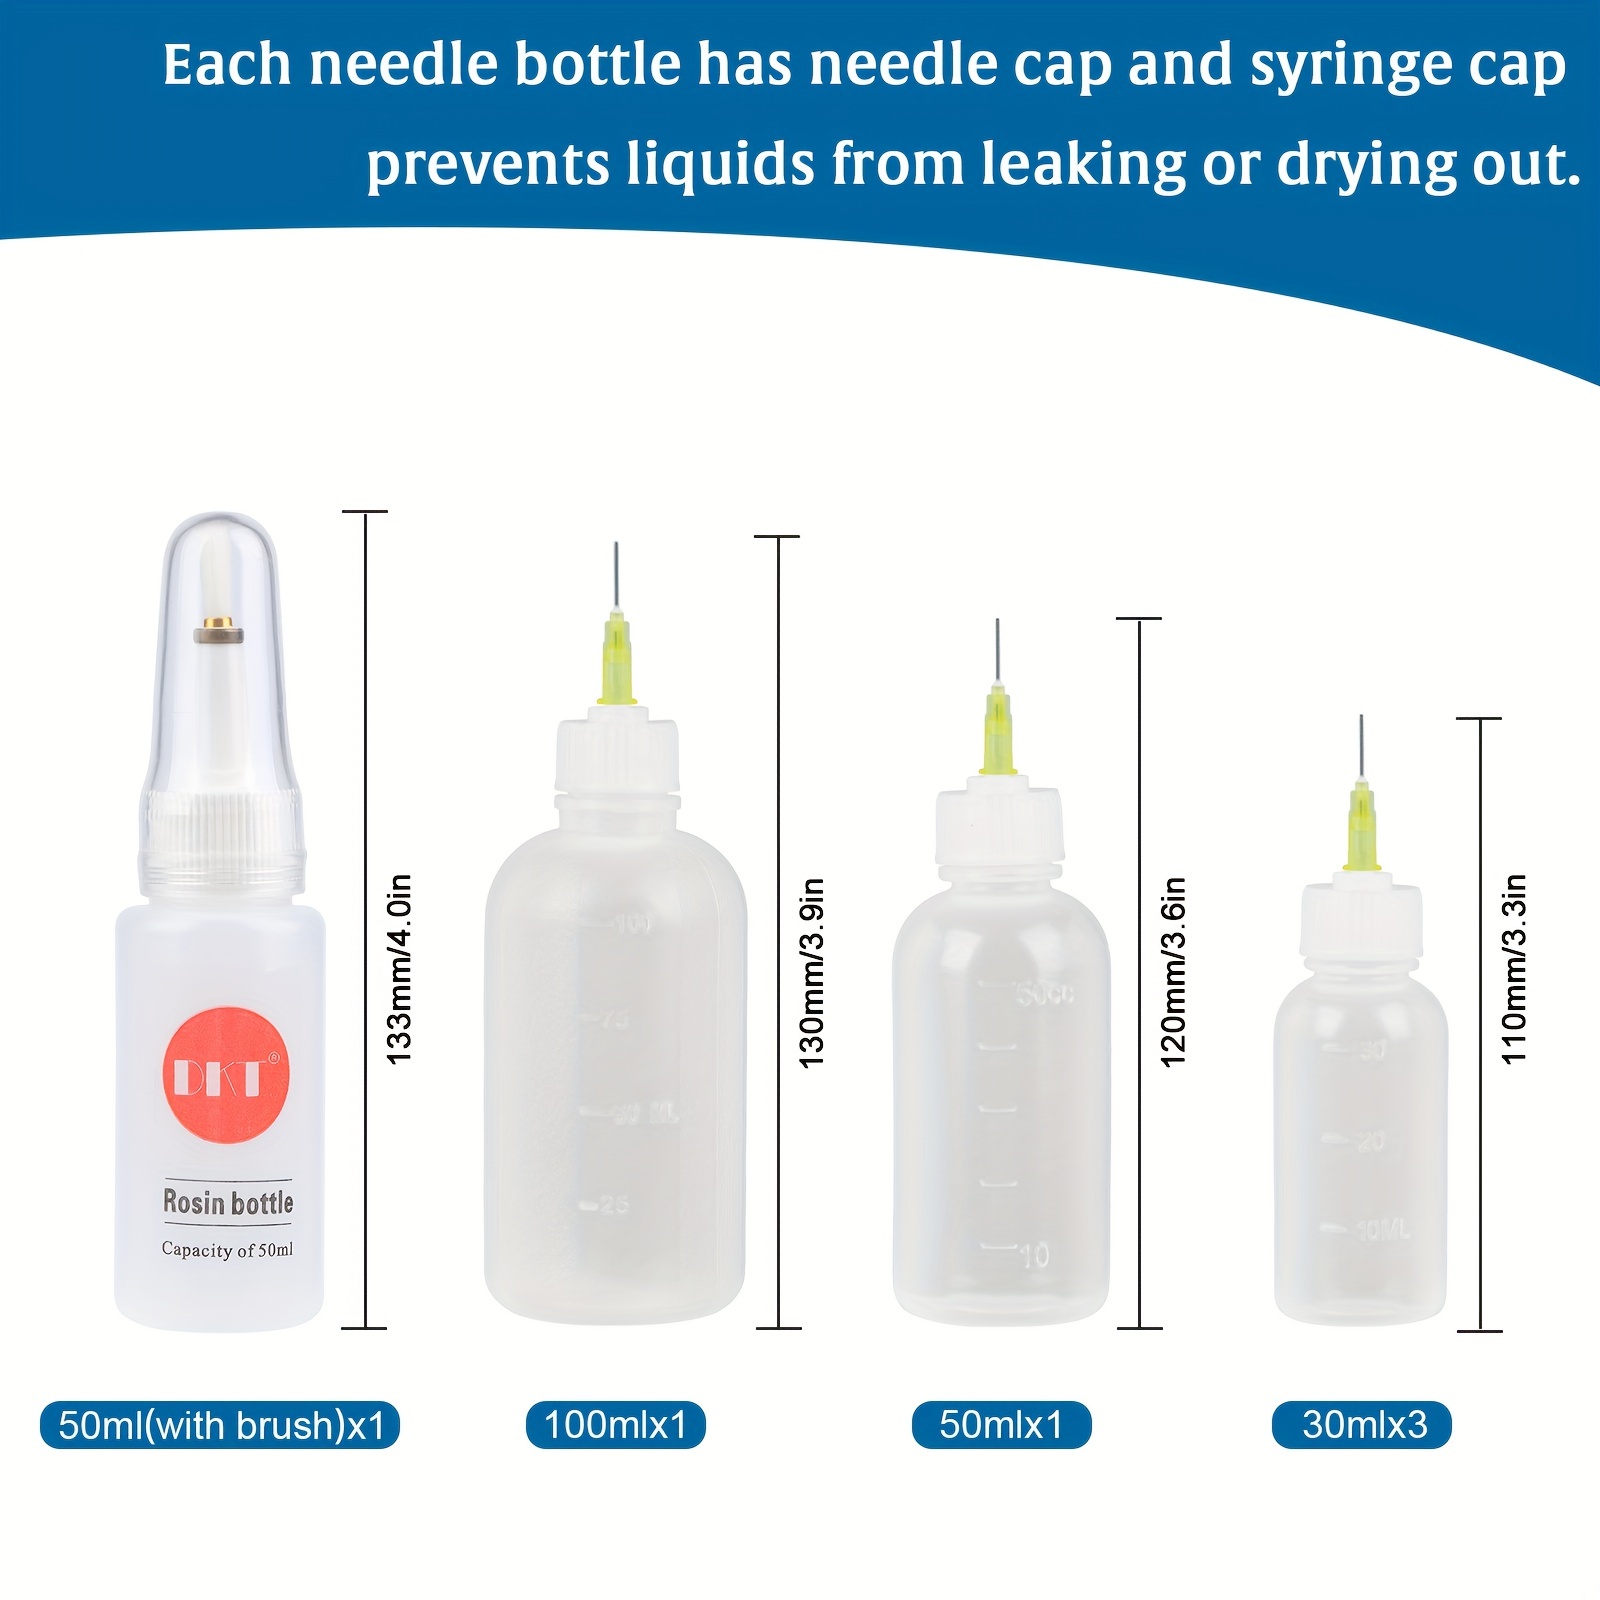 Applicator Bottle Squeeze Dispensers - Round Bottle - 14ga x 1 Needle